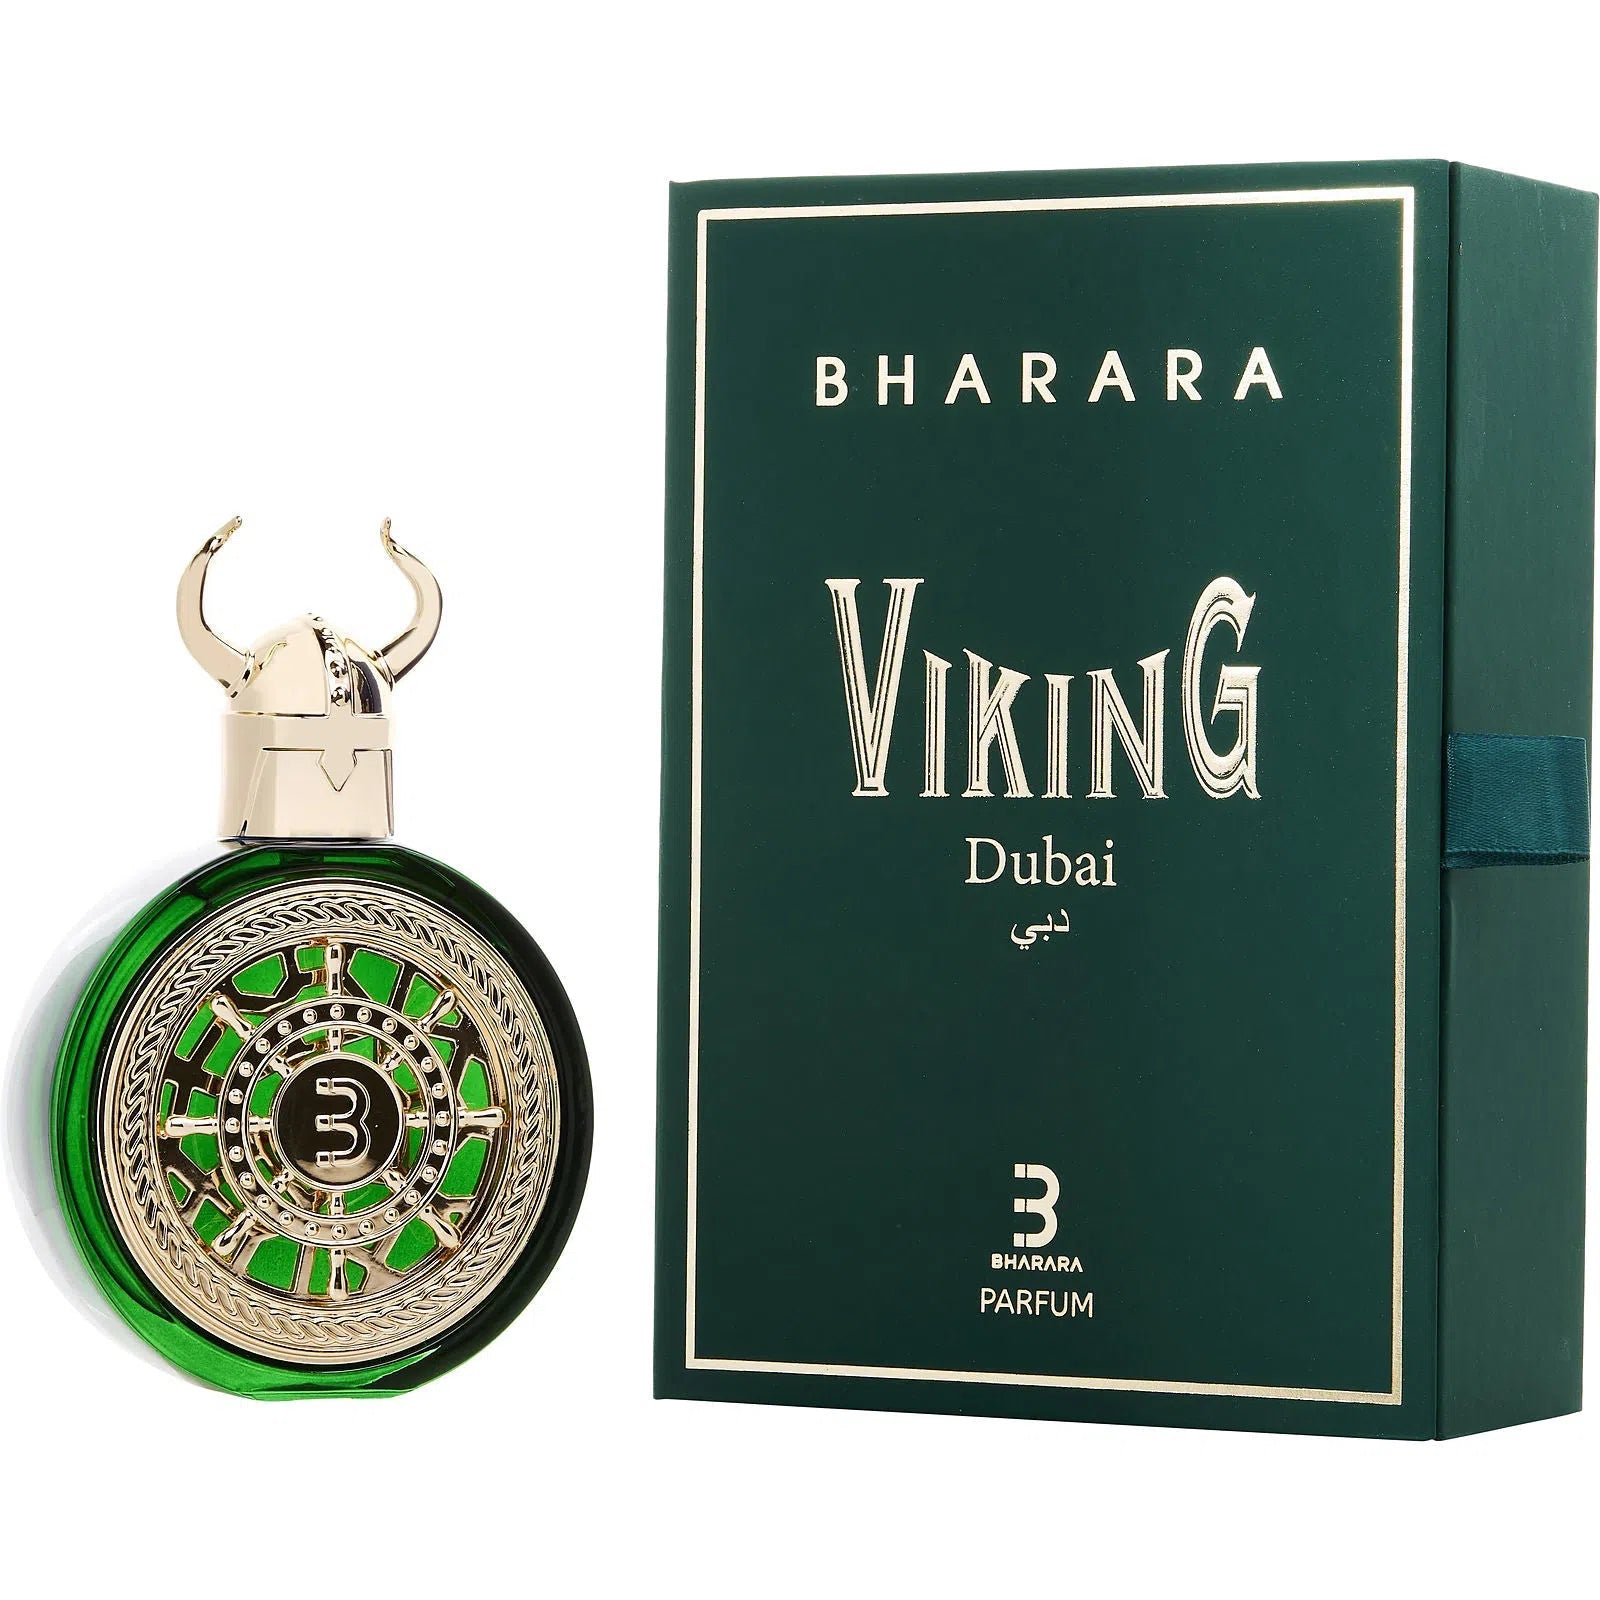 Perfume Bharara Viking Dubai Parfum (M) / 100 ml - 850050062004- Prive Perfumes Honduras